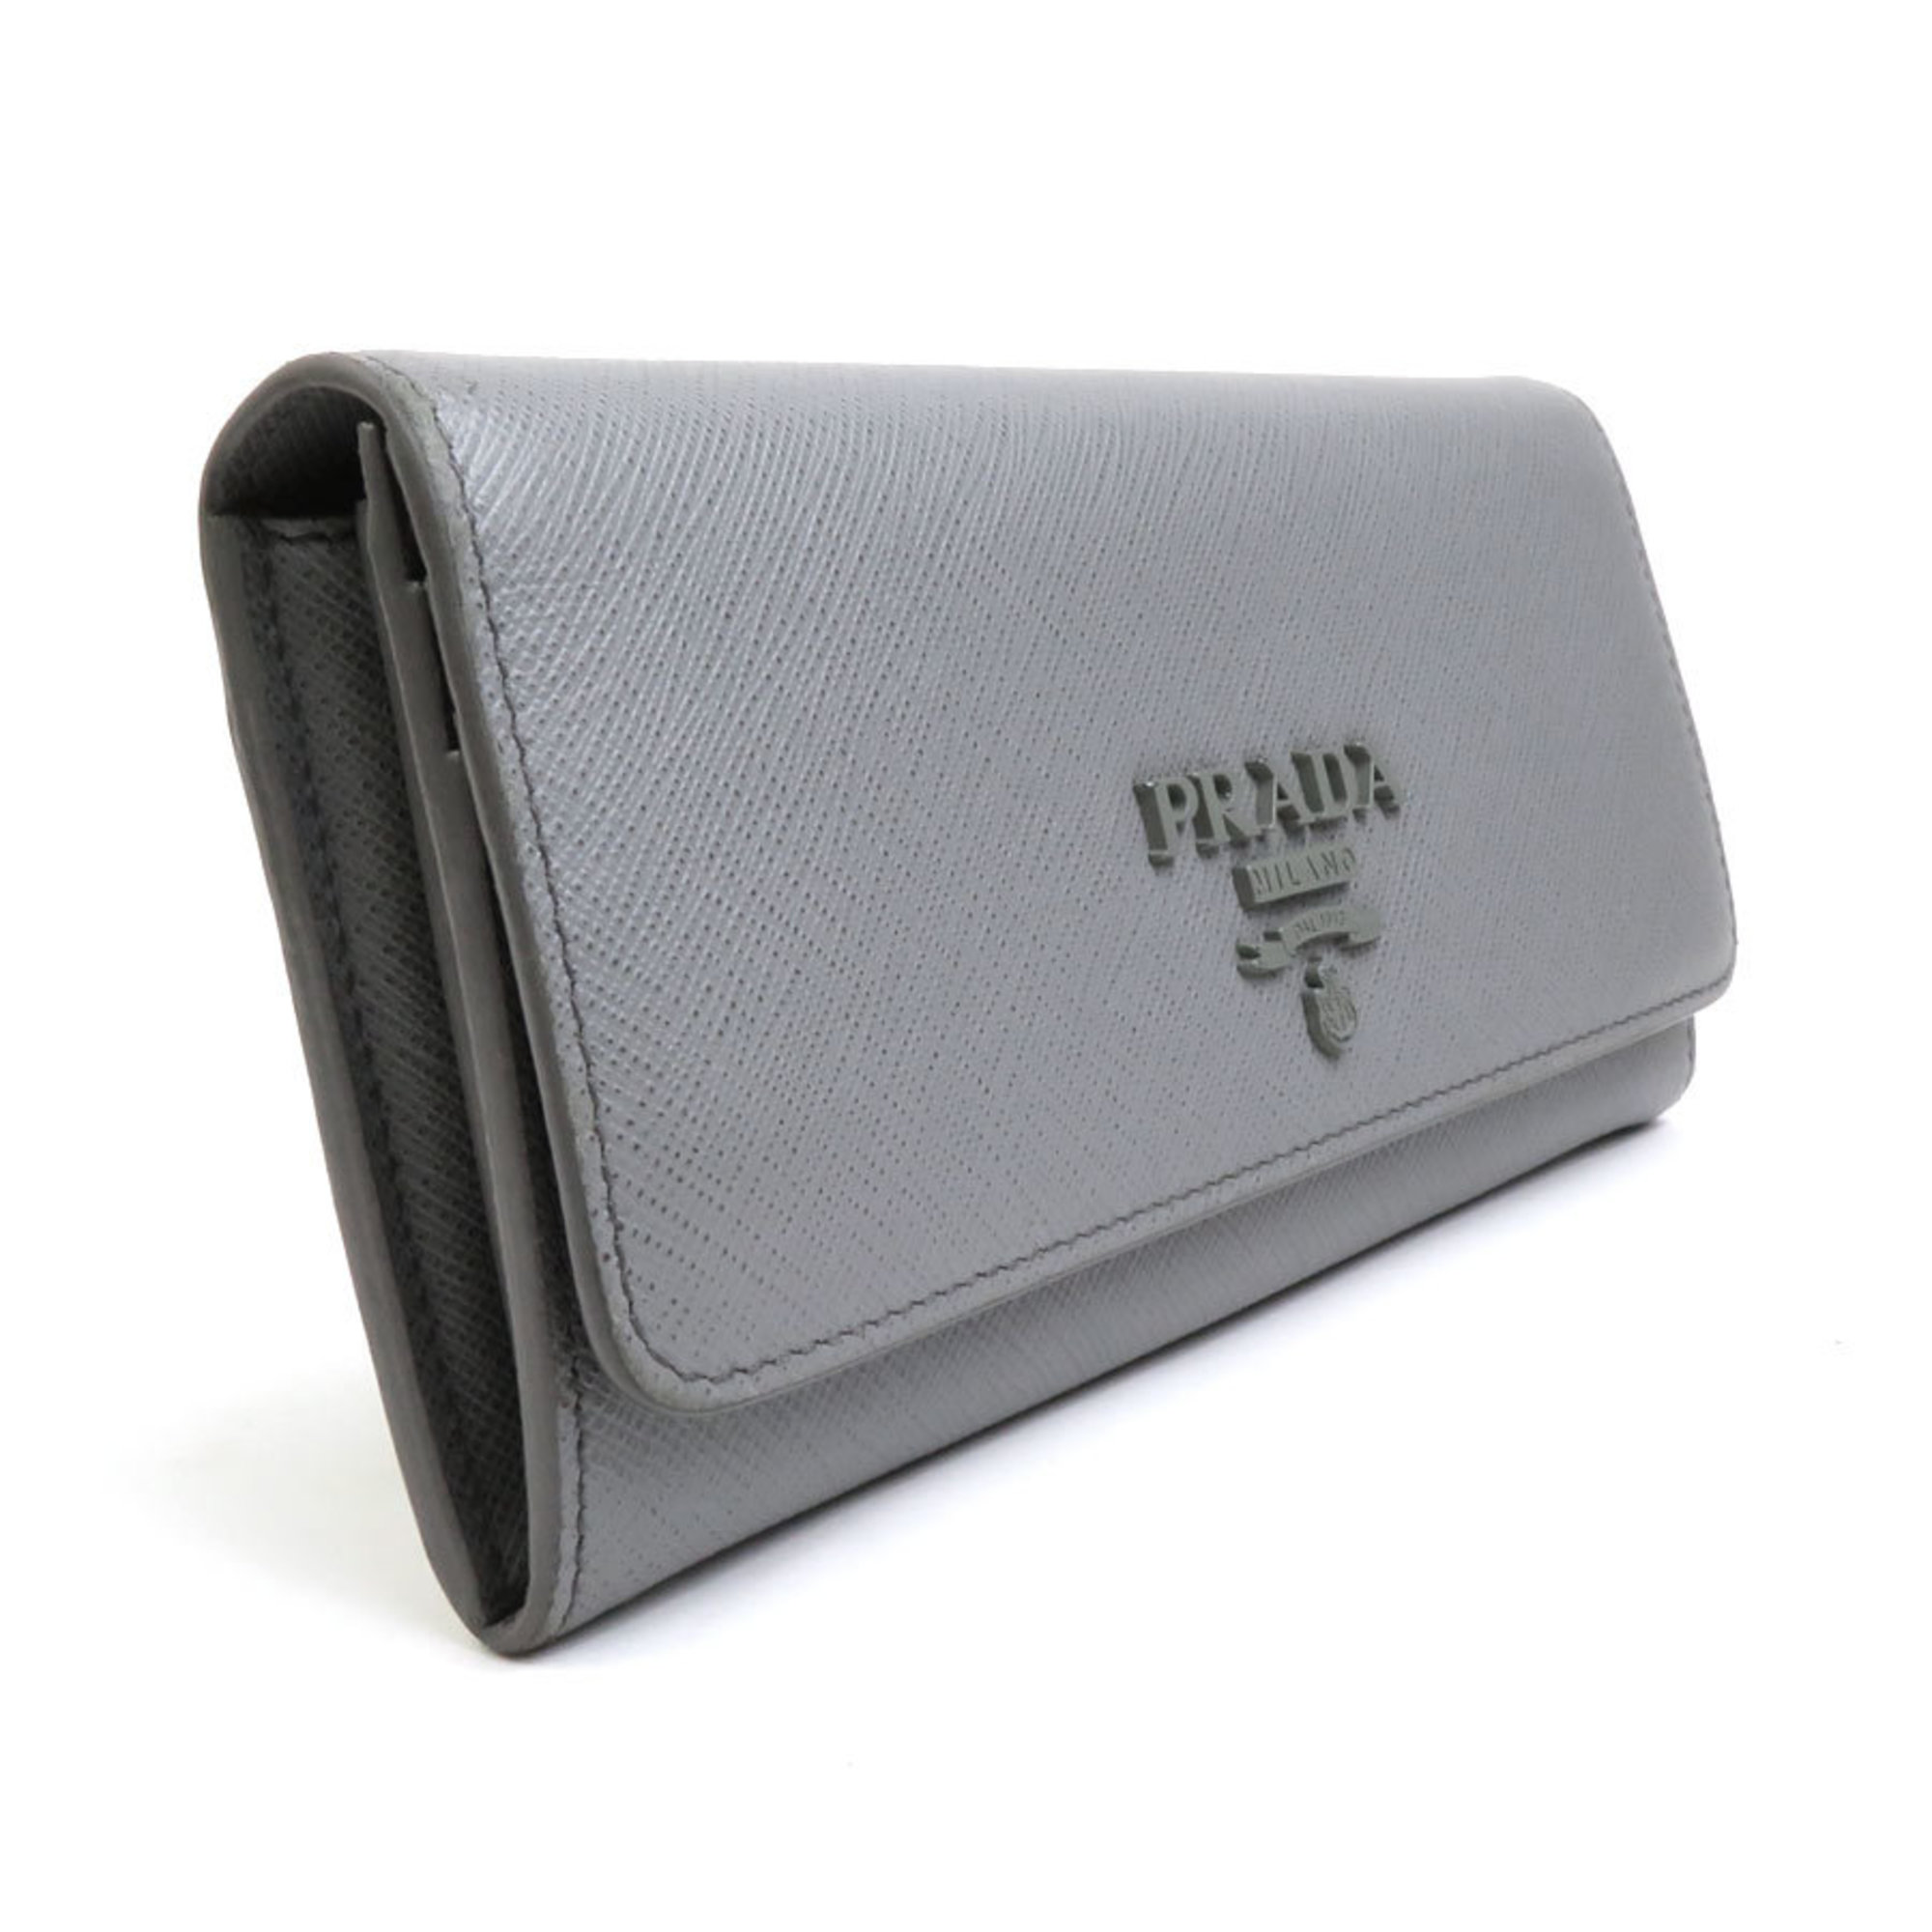 Prada PRADA bi-fold long wallet leather gray unisex 1MH132